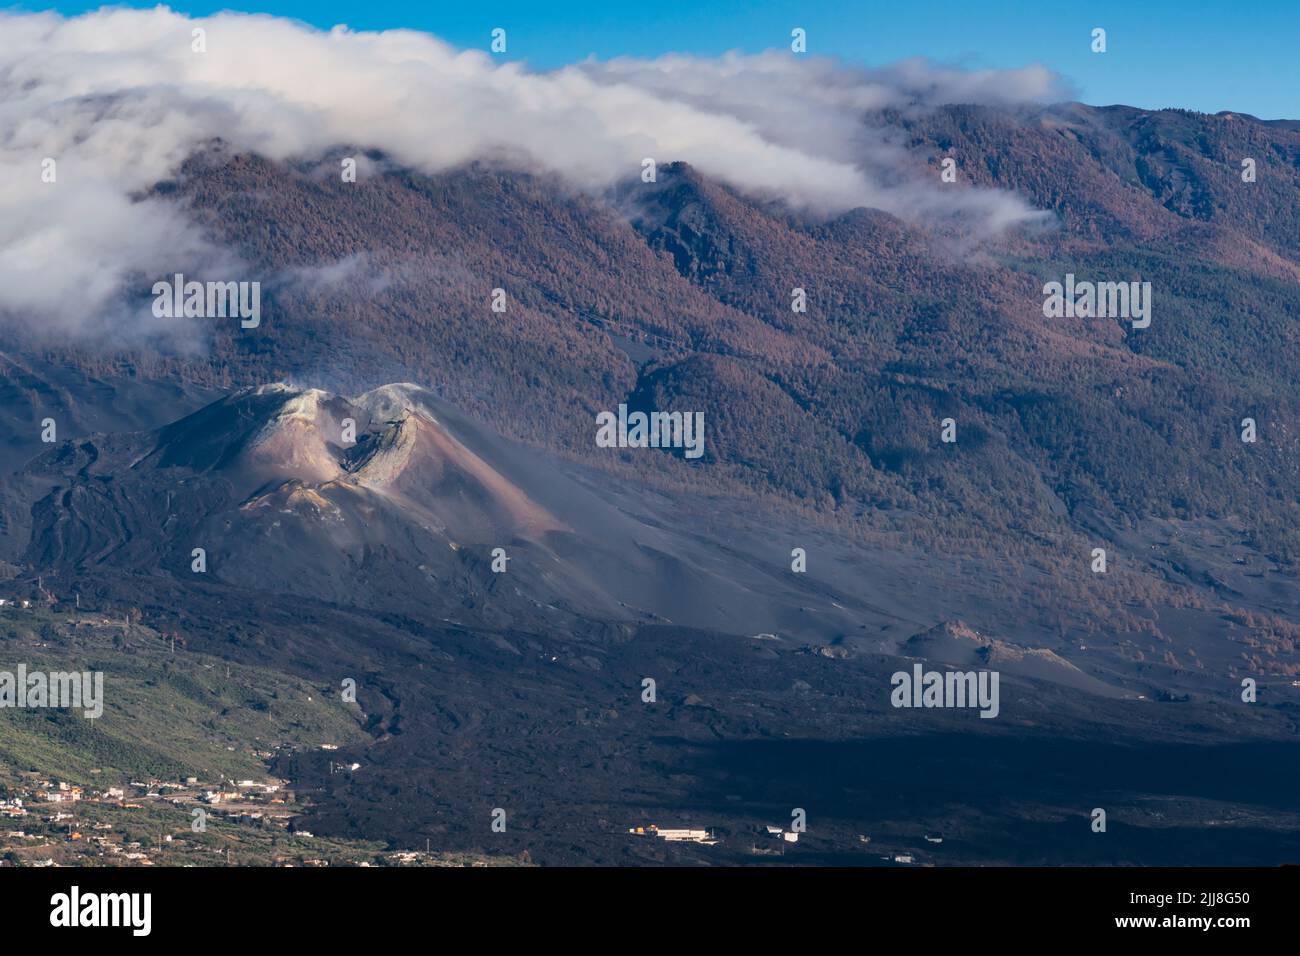 Tajogaite volcano cone seen from Mirador del Time. The volcanic eruption began on September 19, 2021, in the area of Cabeza de Vaca. The eruption ende Stock Photo